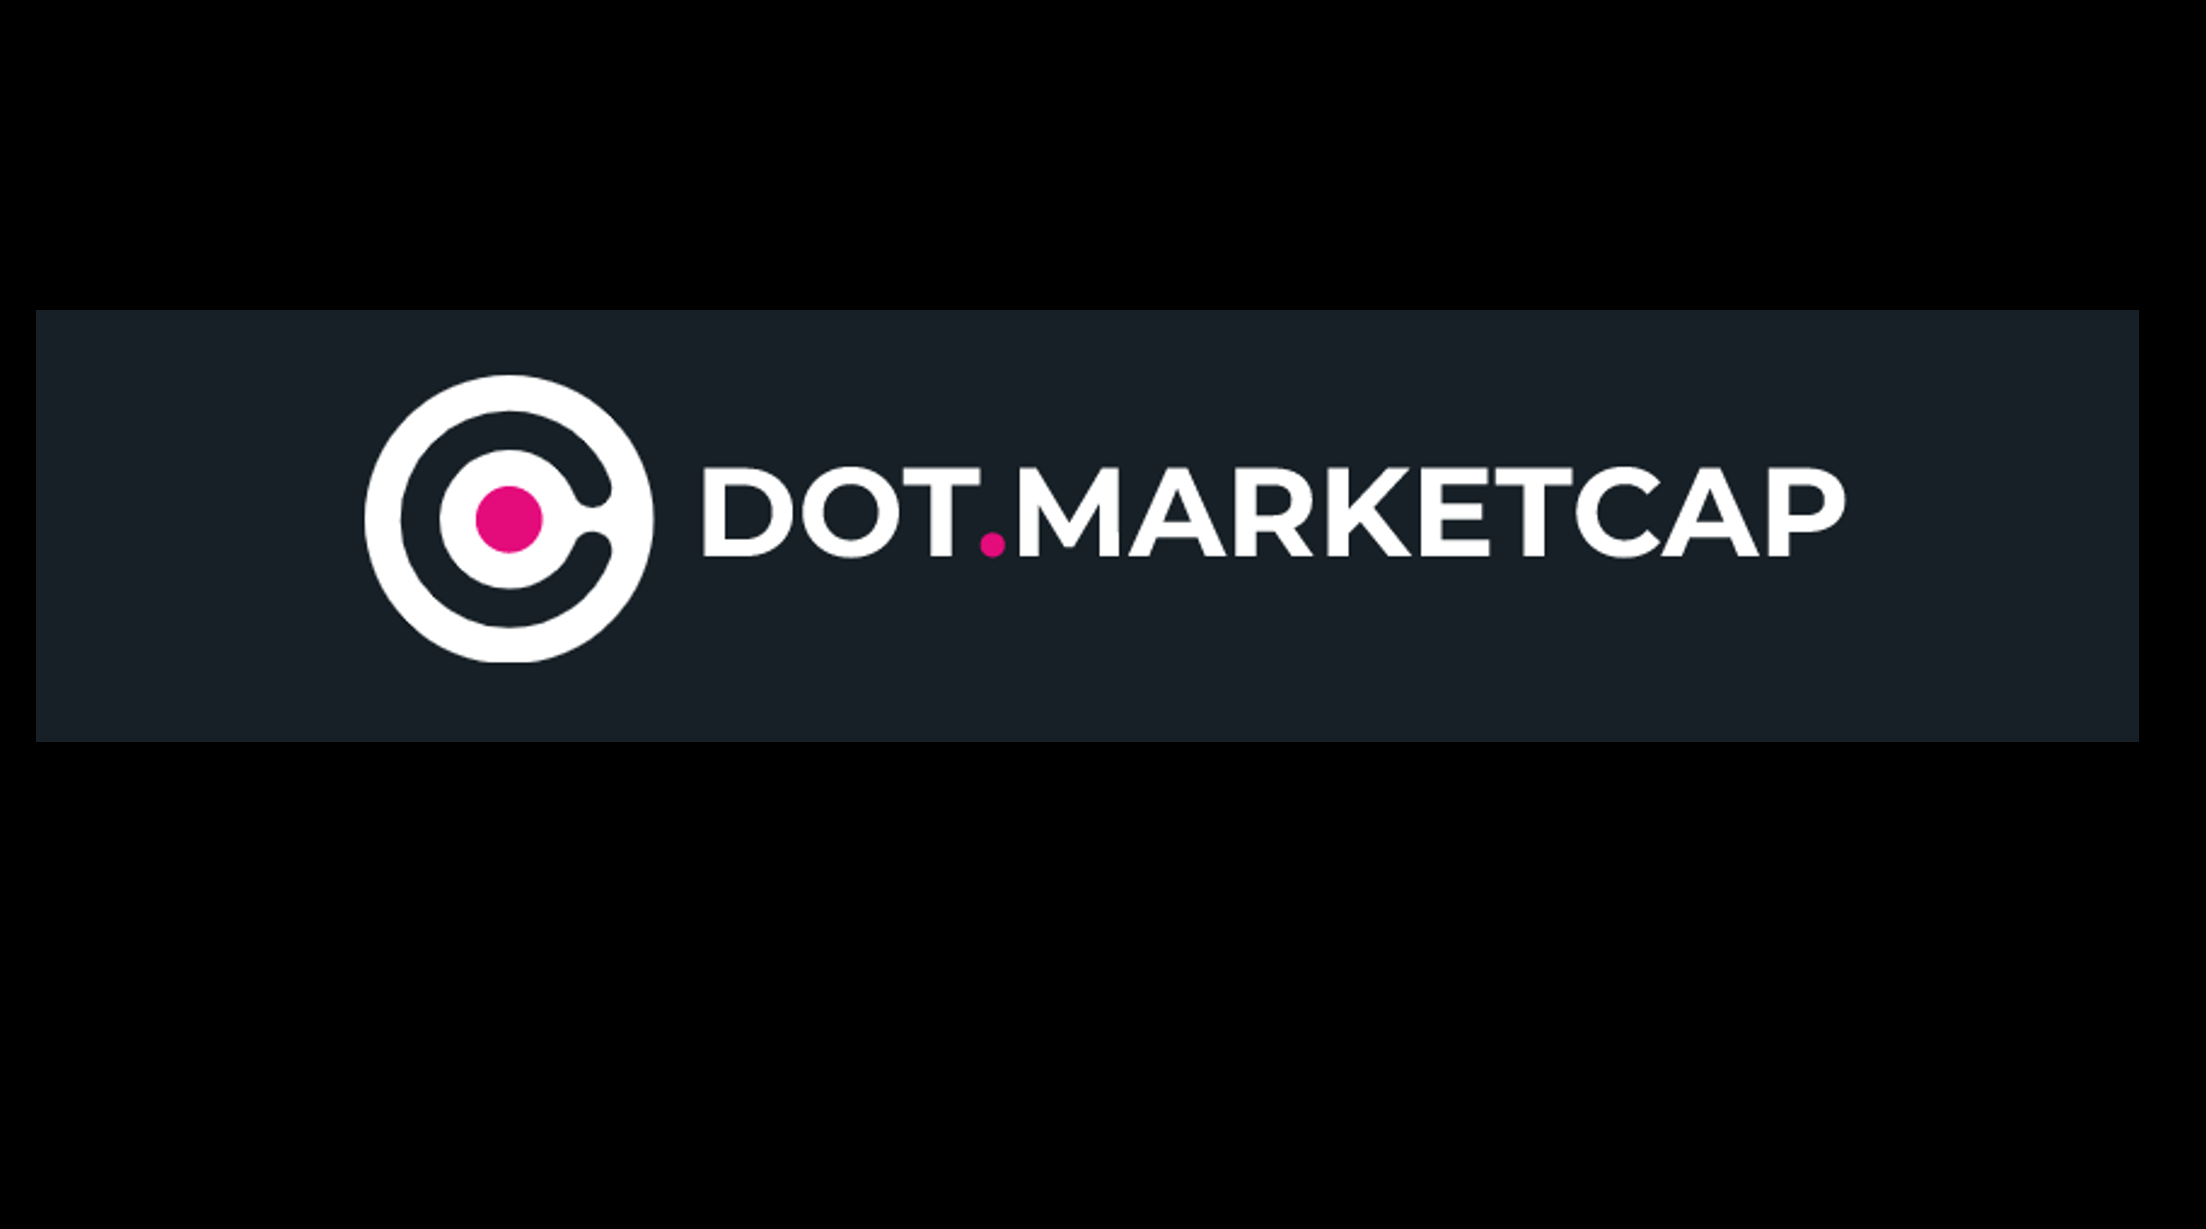 DOT.MarketCap